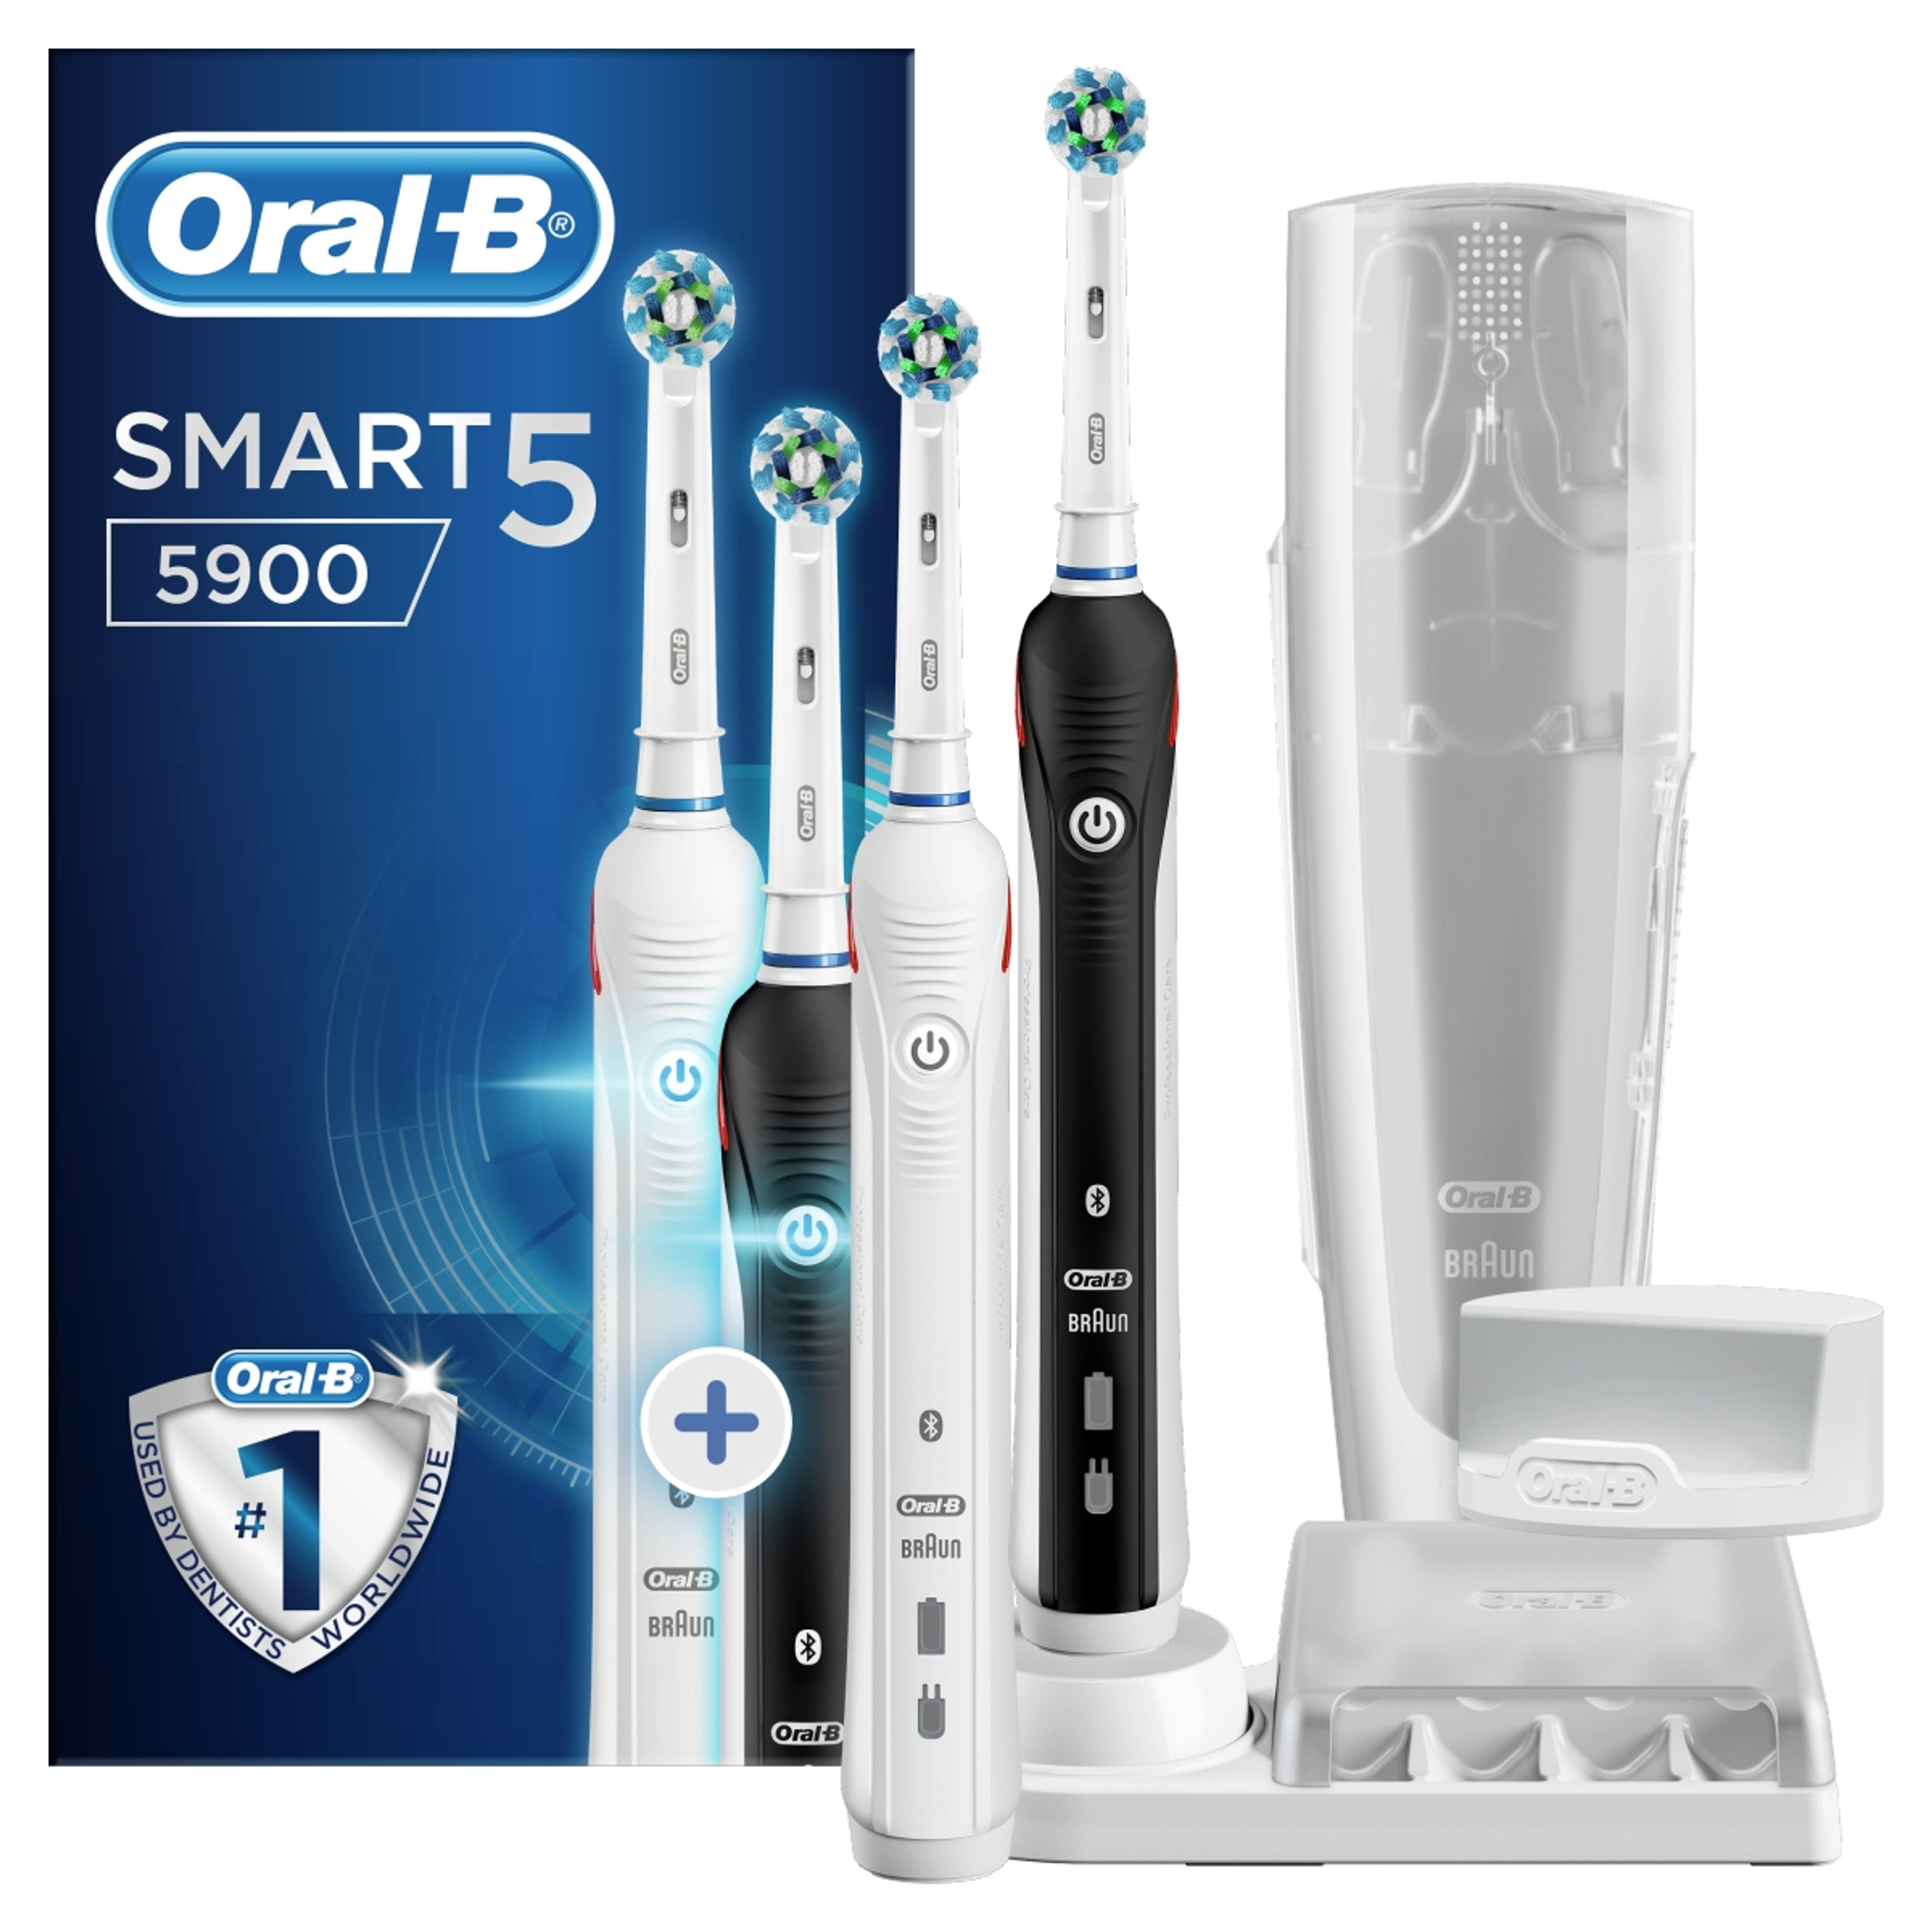 Oral-B Smart5 5900 elektromos fogkefe, black+white - 2 db-8